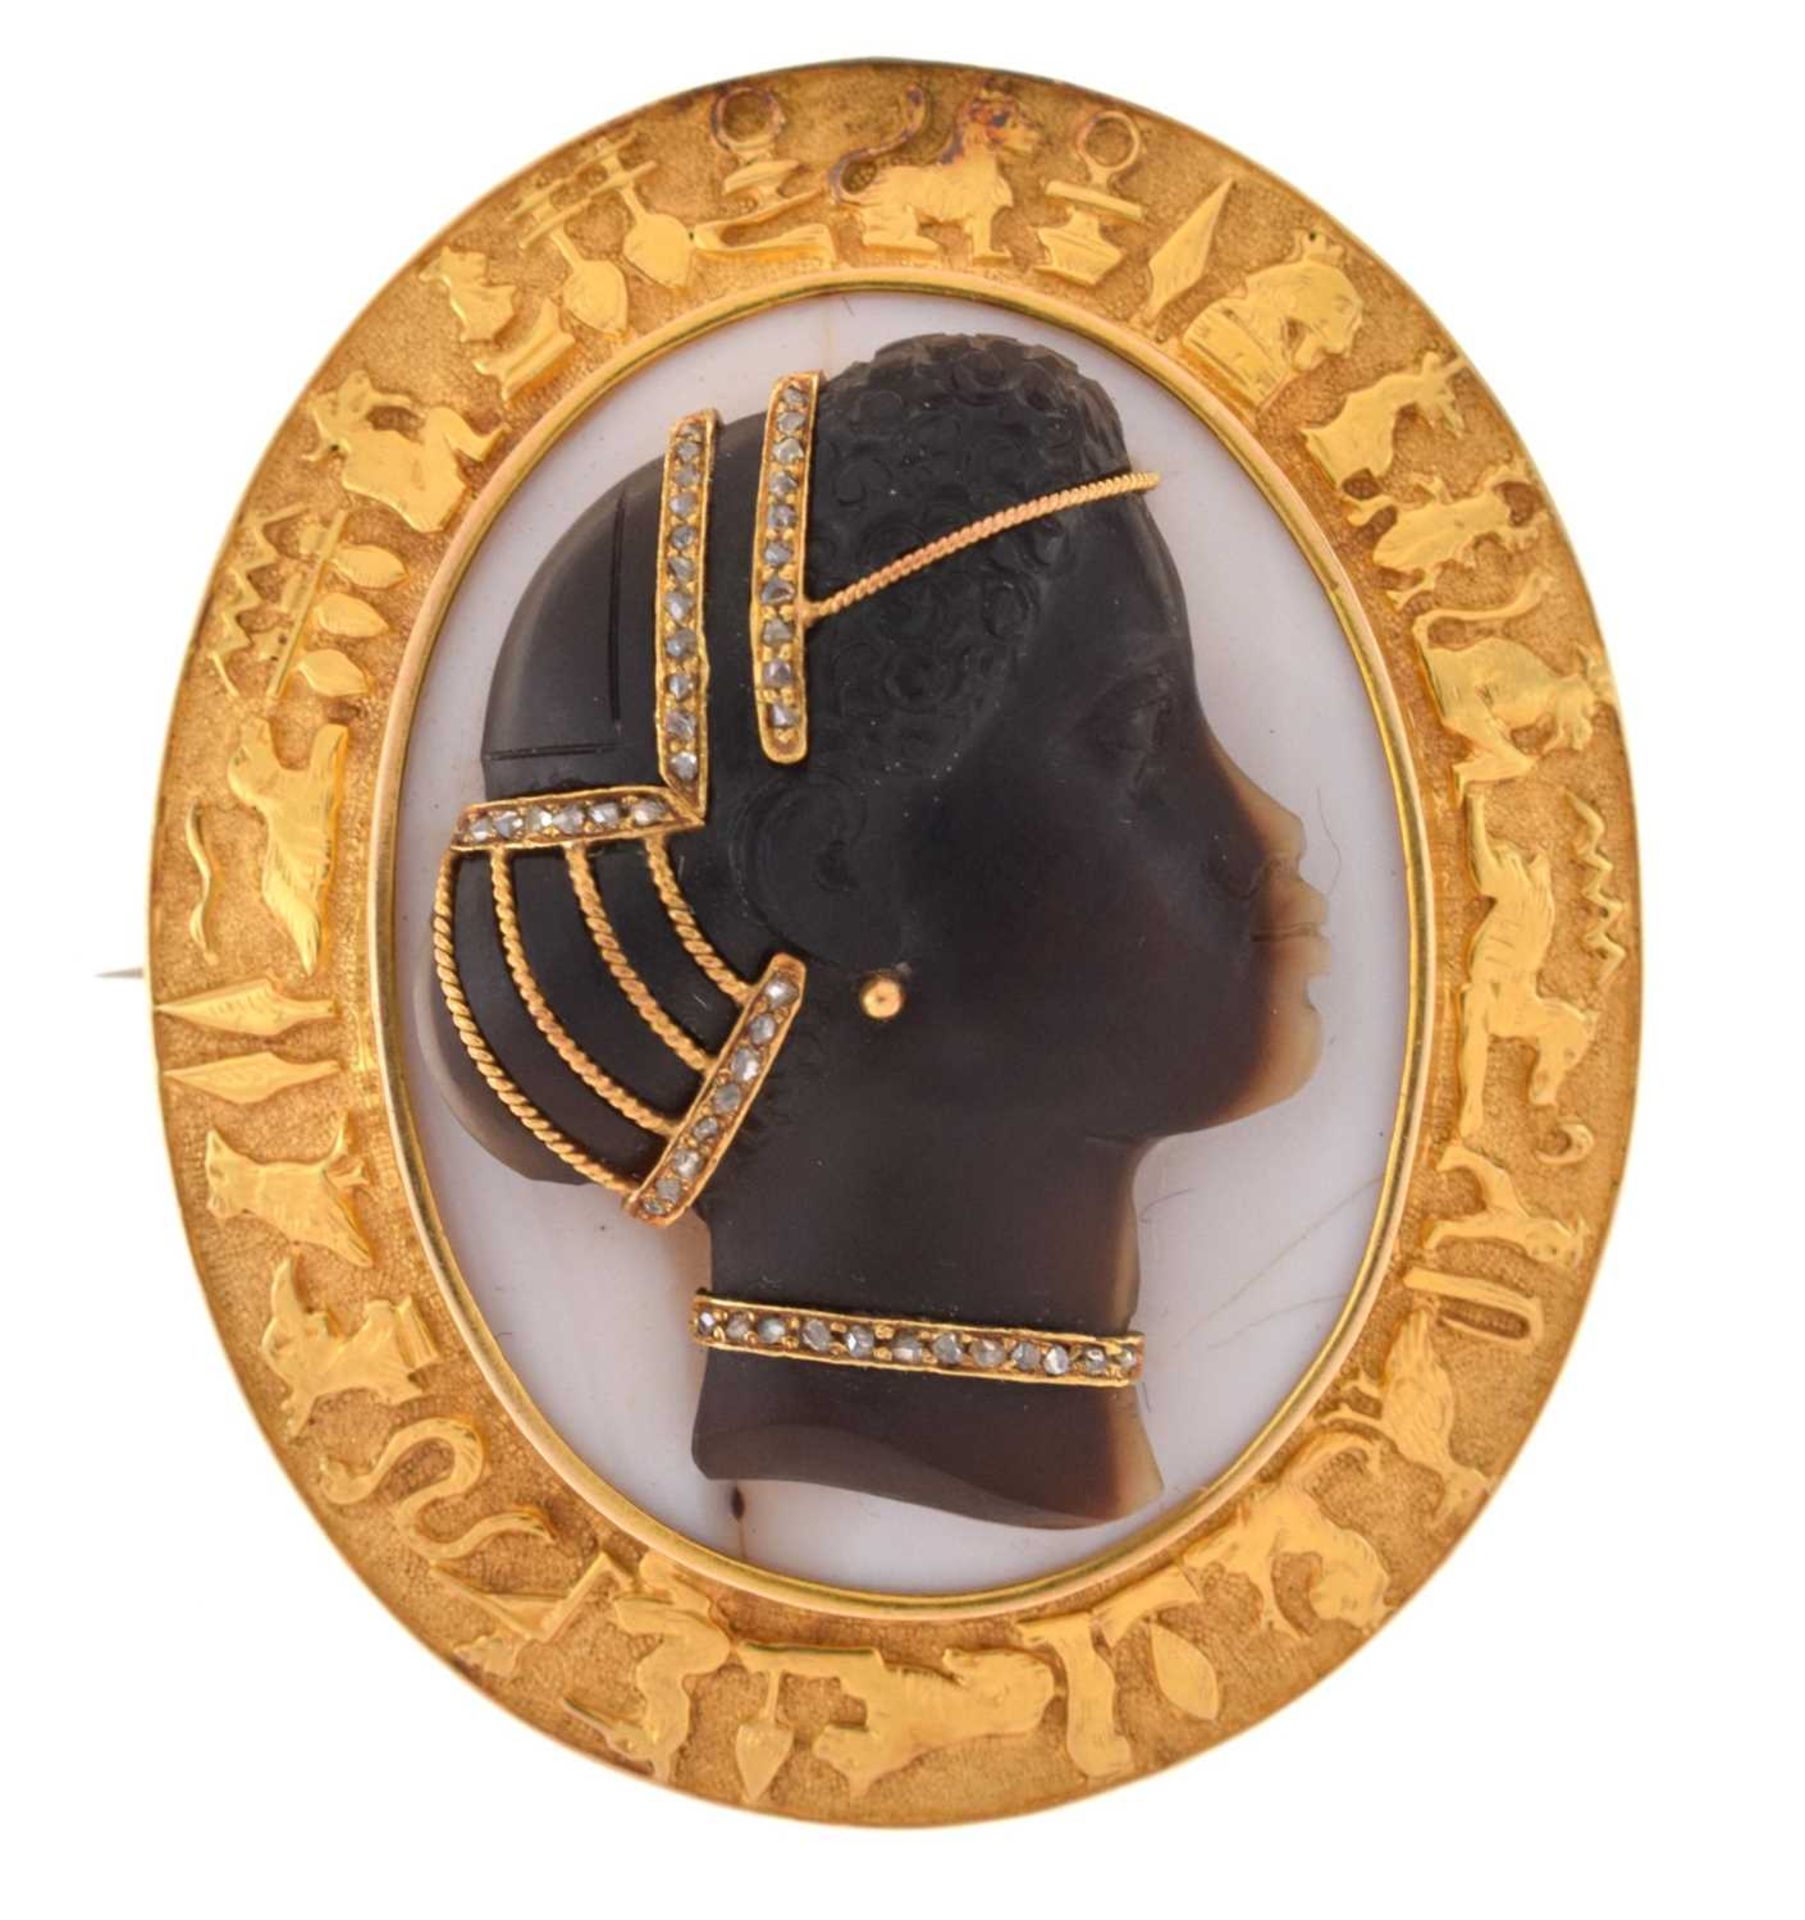 Good 19th century hardstone cameo habille brooch